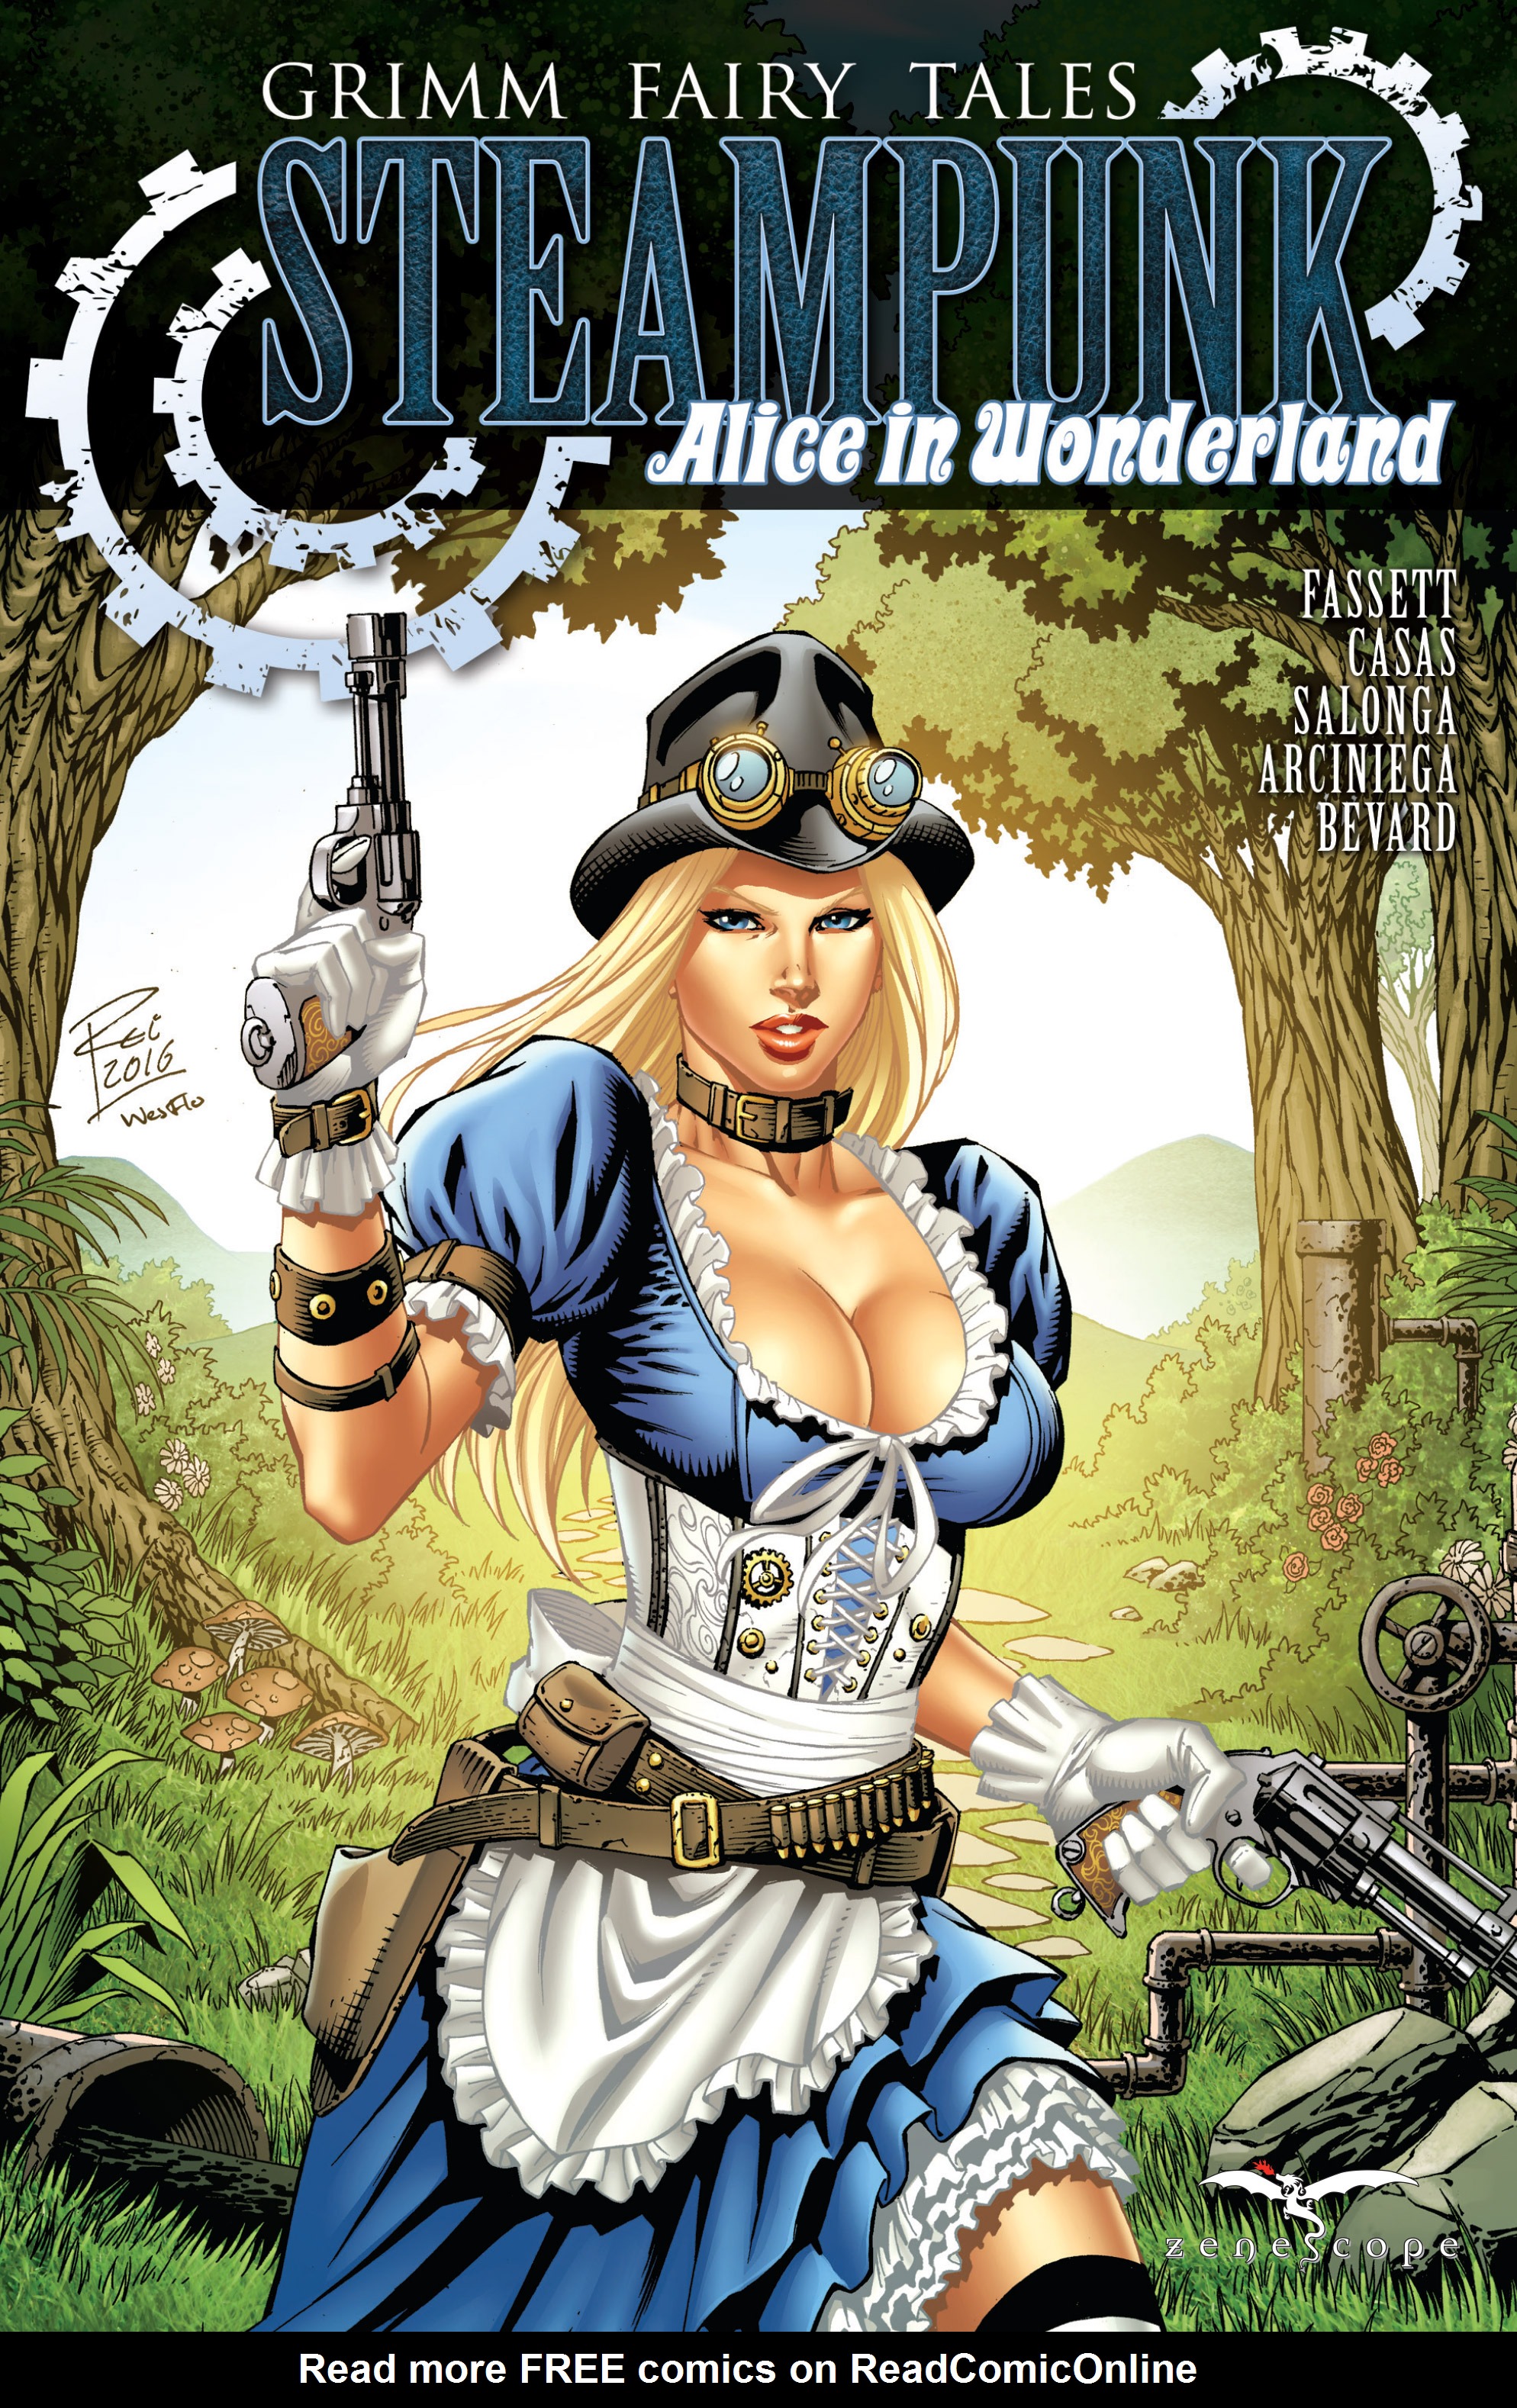 Read online Steampunk: Alice in Wonderland comic -  Issue # Full - 1